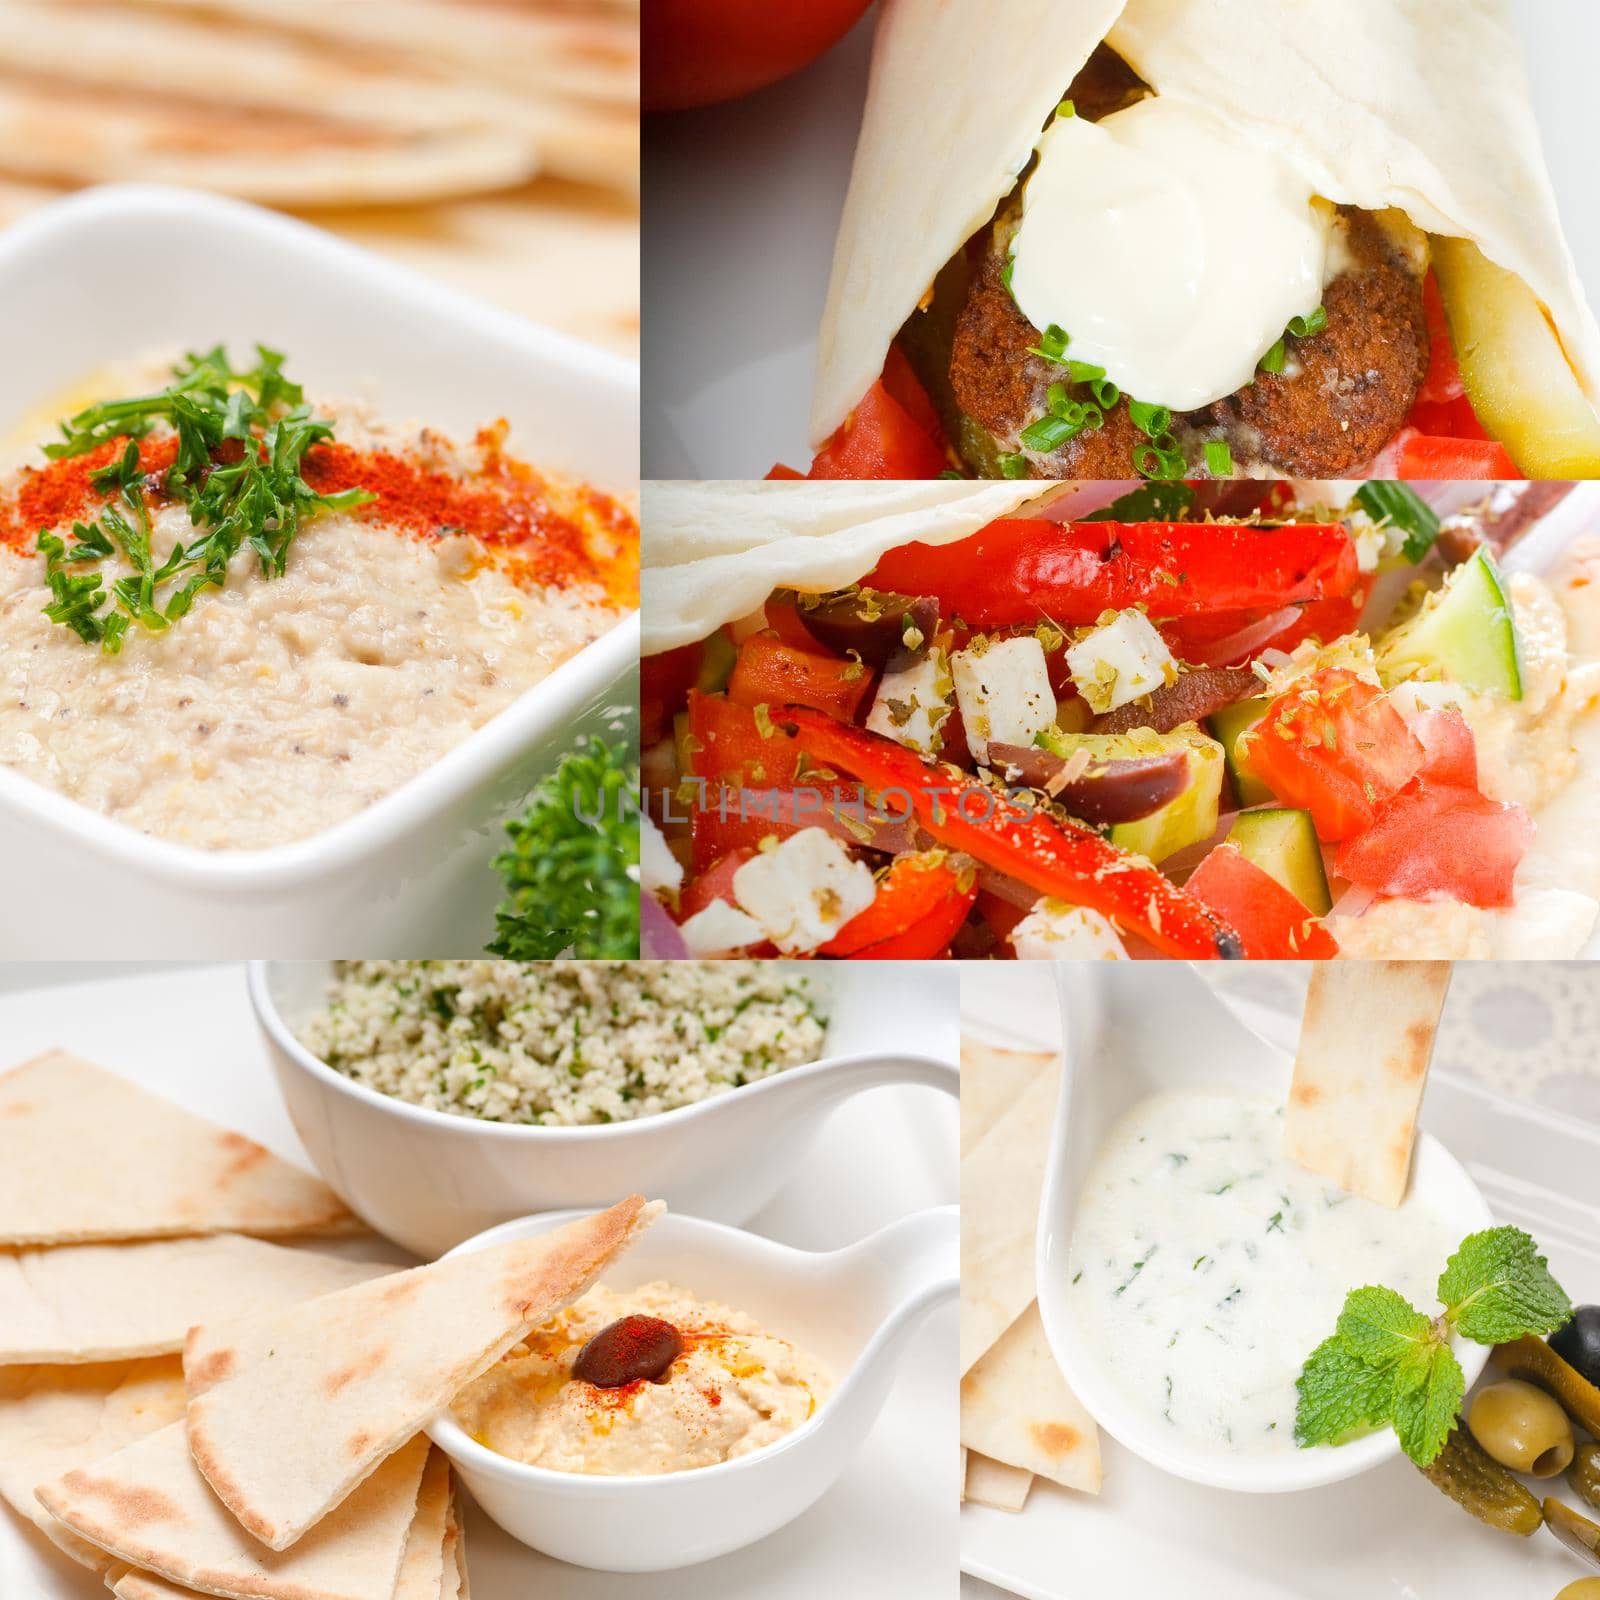 most popular Arab middle east food collection,hummus, falafel,mutabal,pita bread